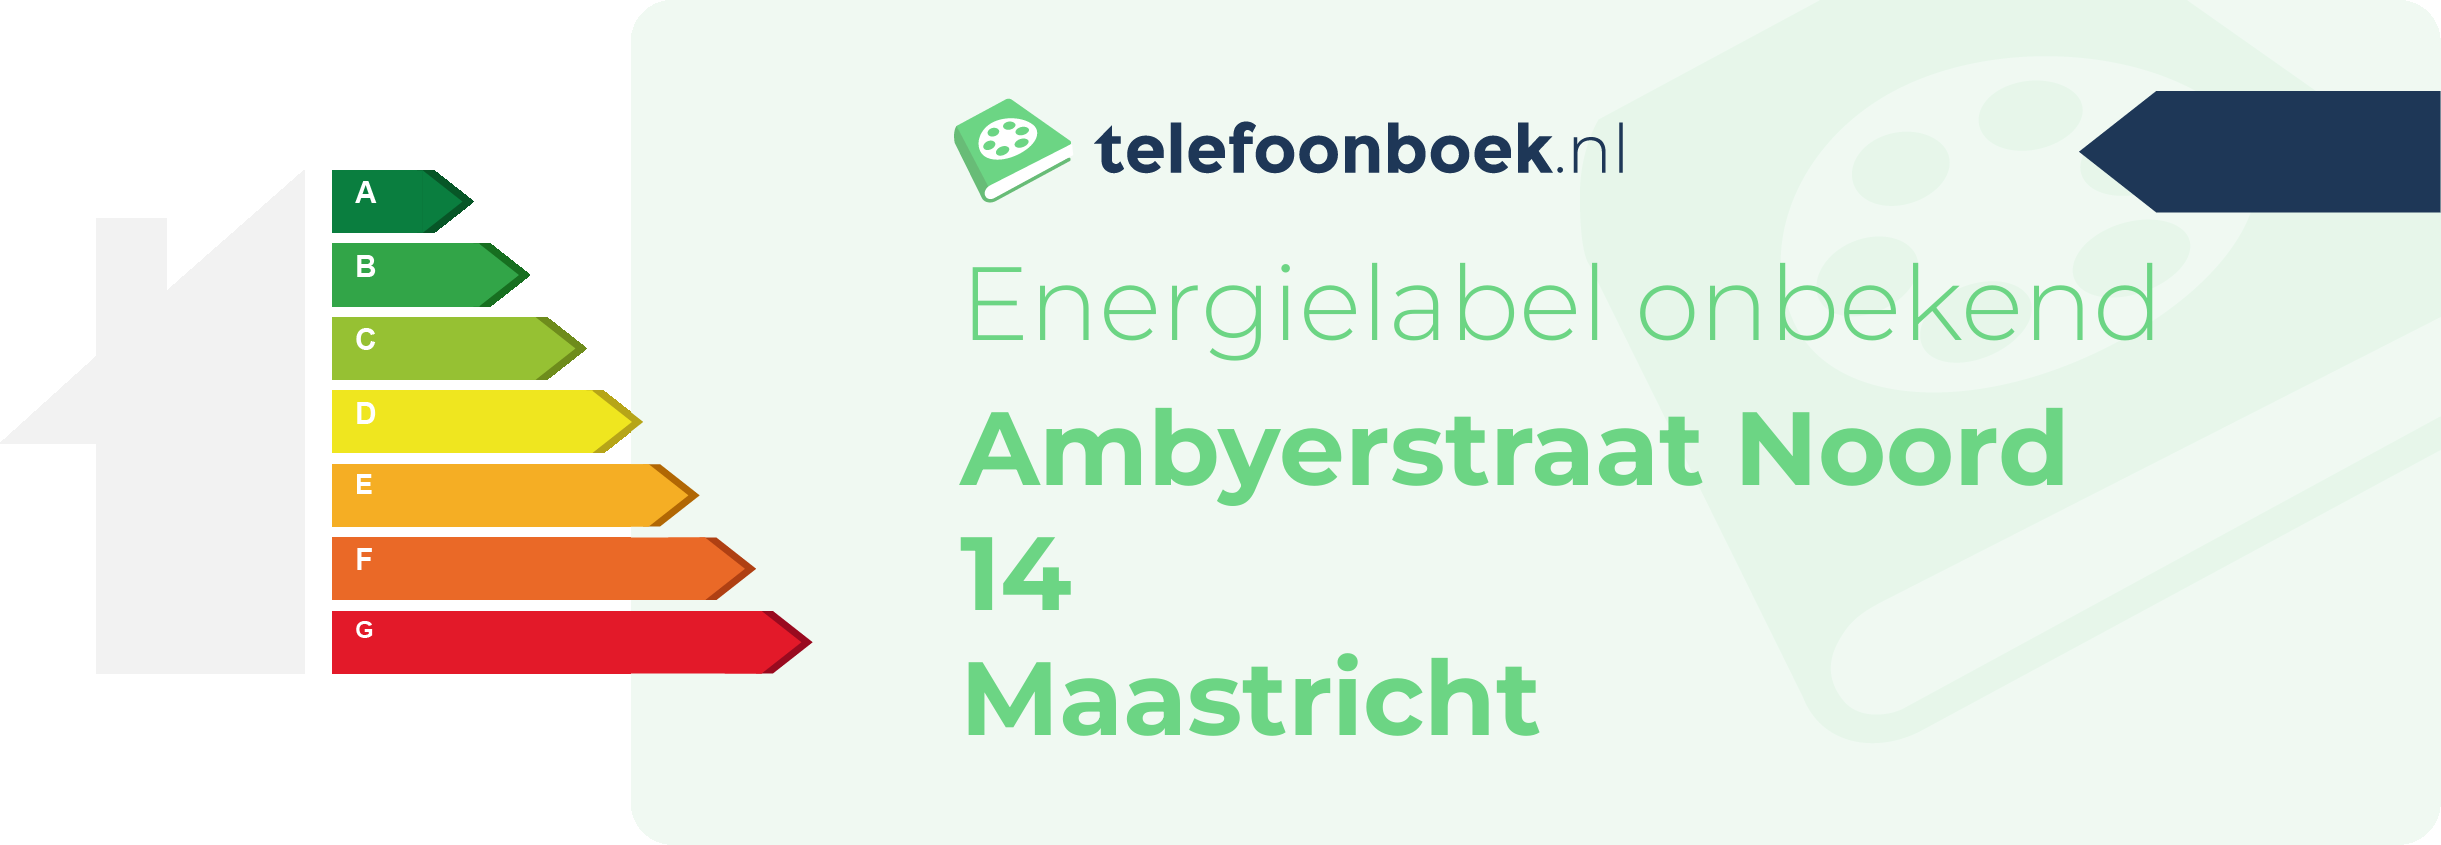 Energielabel Ambyerstraat Noord 14 Maastricht